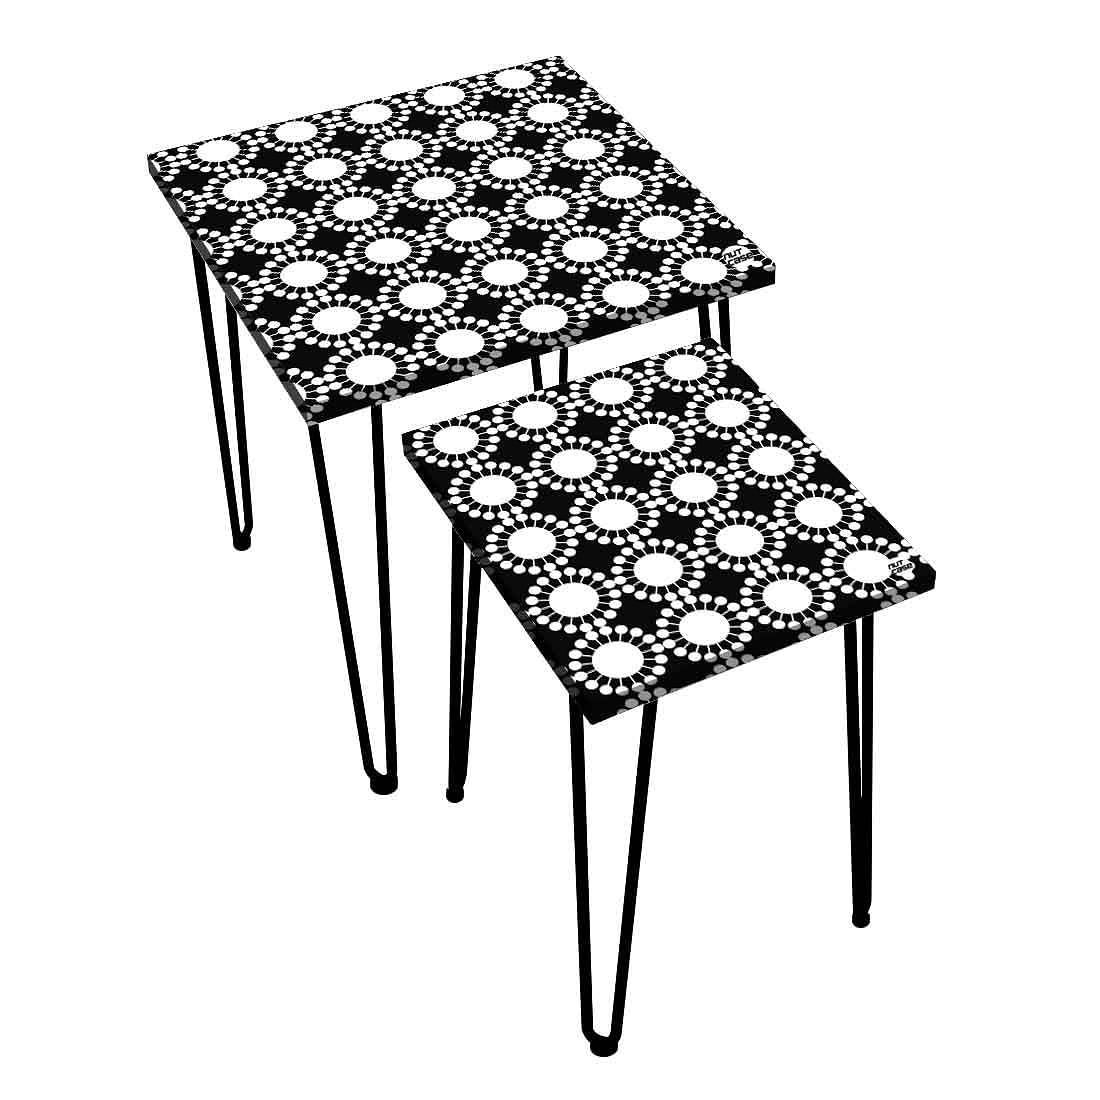 Designer Nesting Tables for Balcony Office Set of 2 - White Circle Nutcase